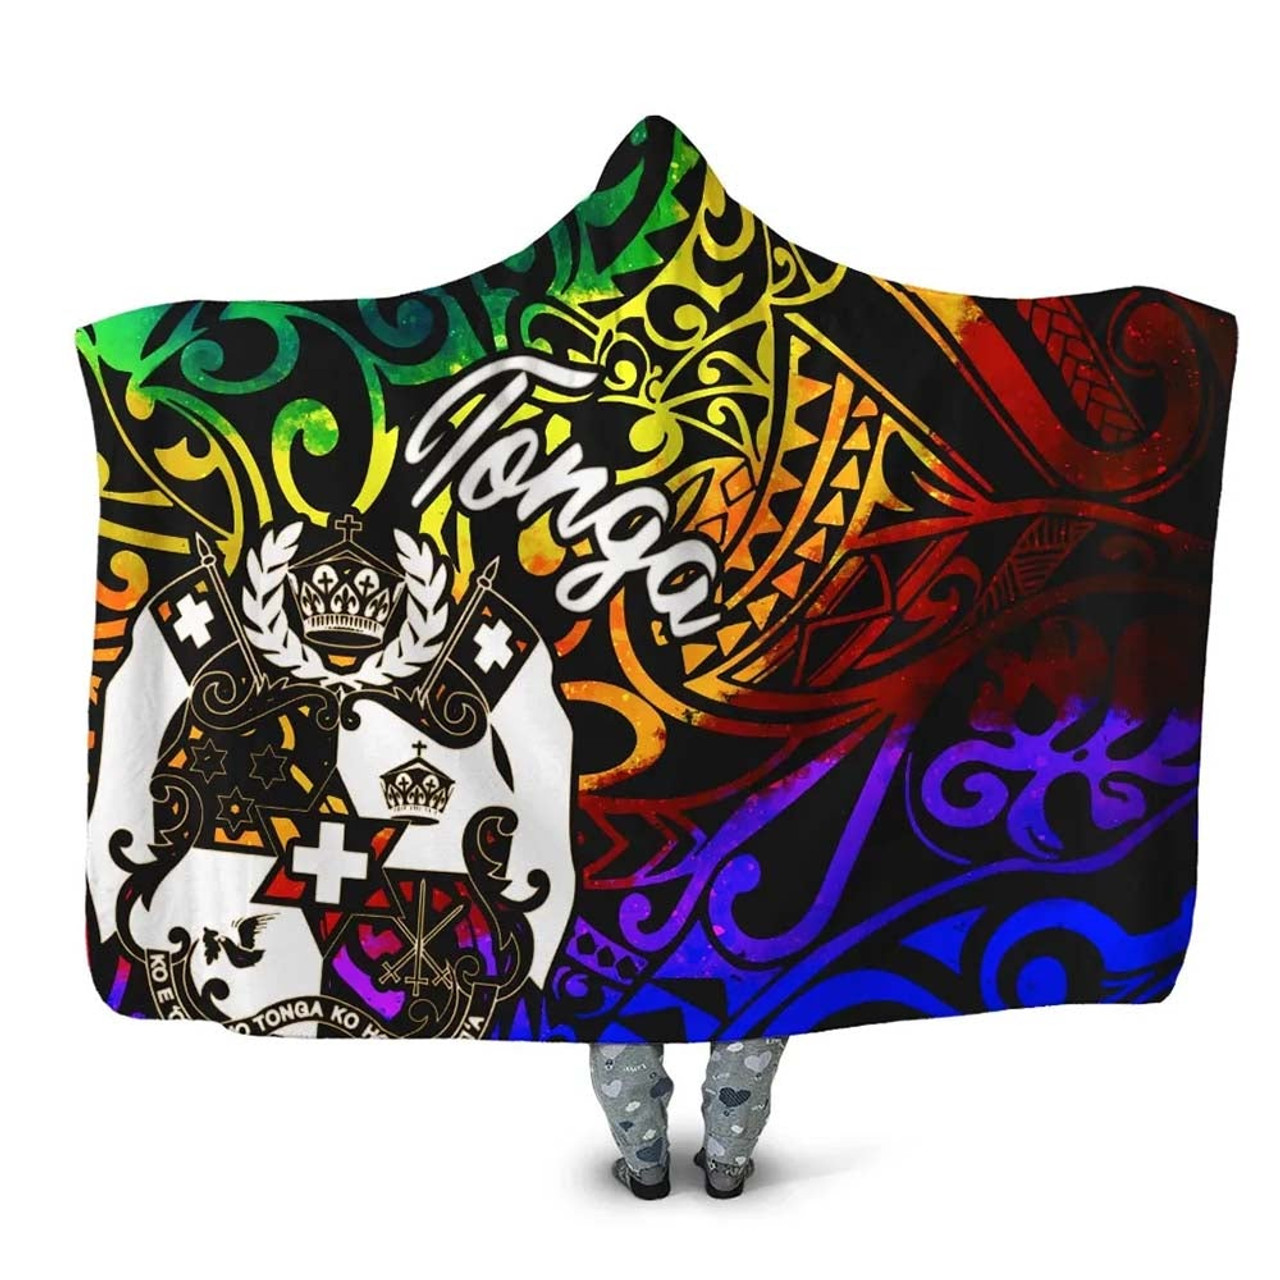 Tonga Hooded Blanket - Rainbow Polynesian Pattern 1